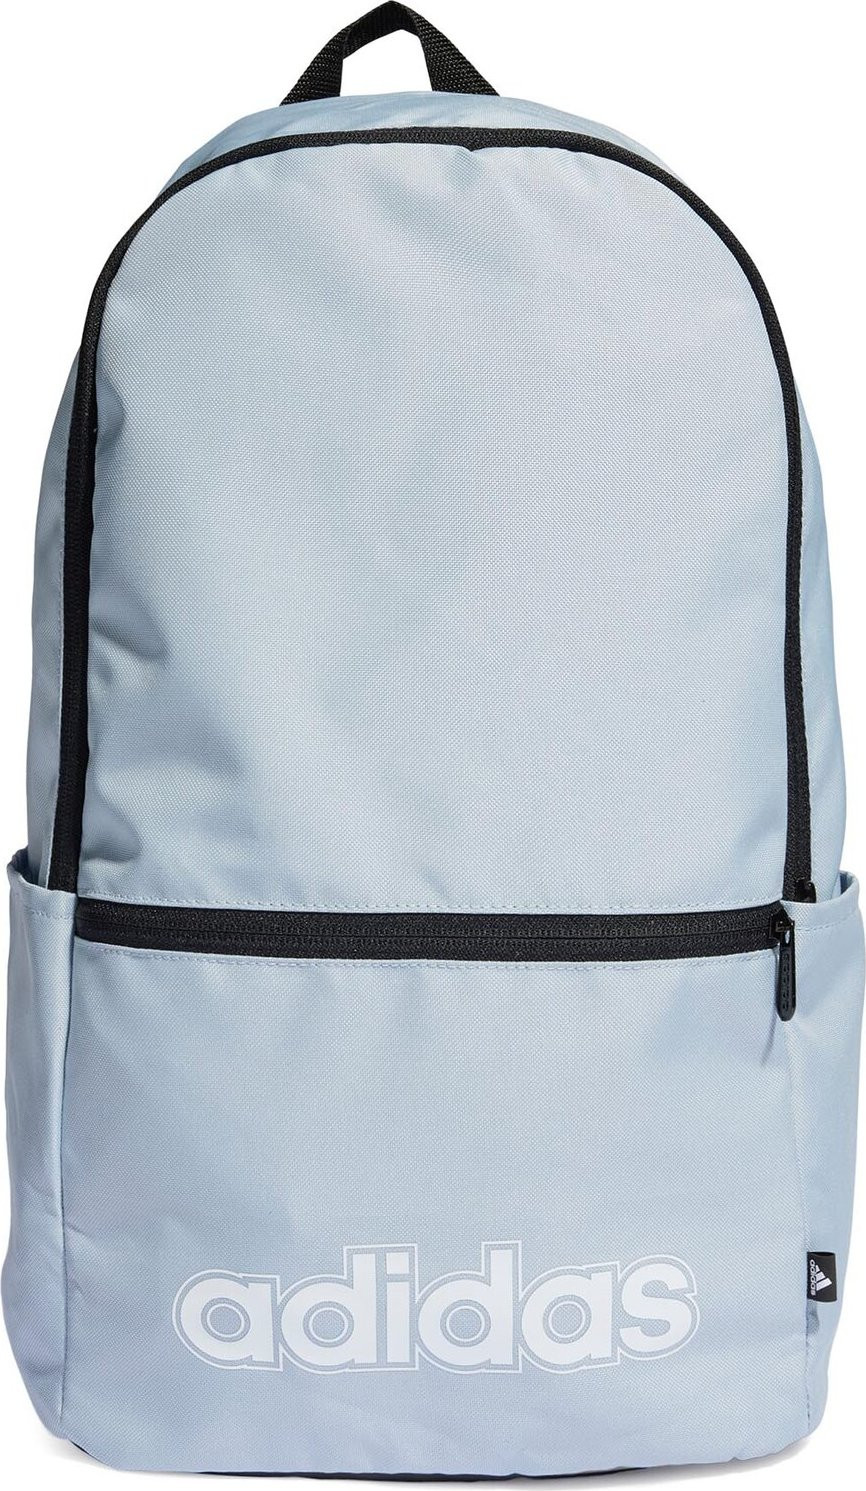 Batoh adidas Classic Foundation Backpack IK5768 Světle modrá